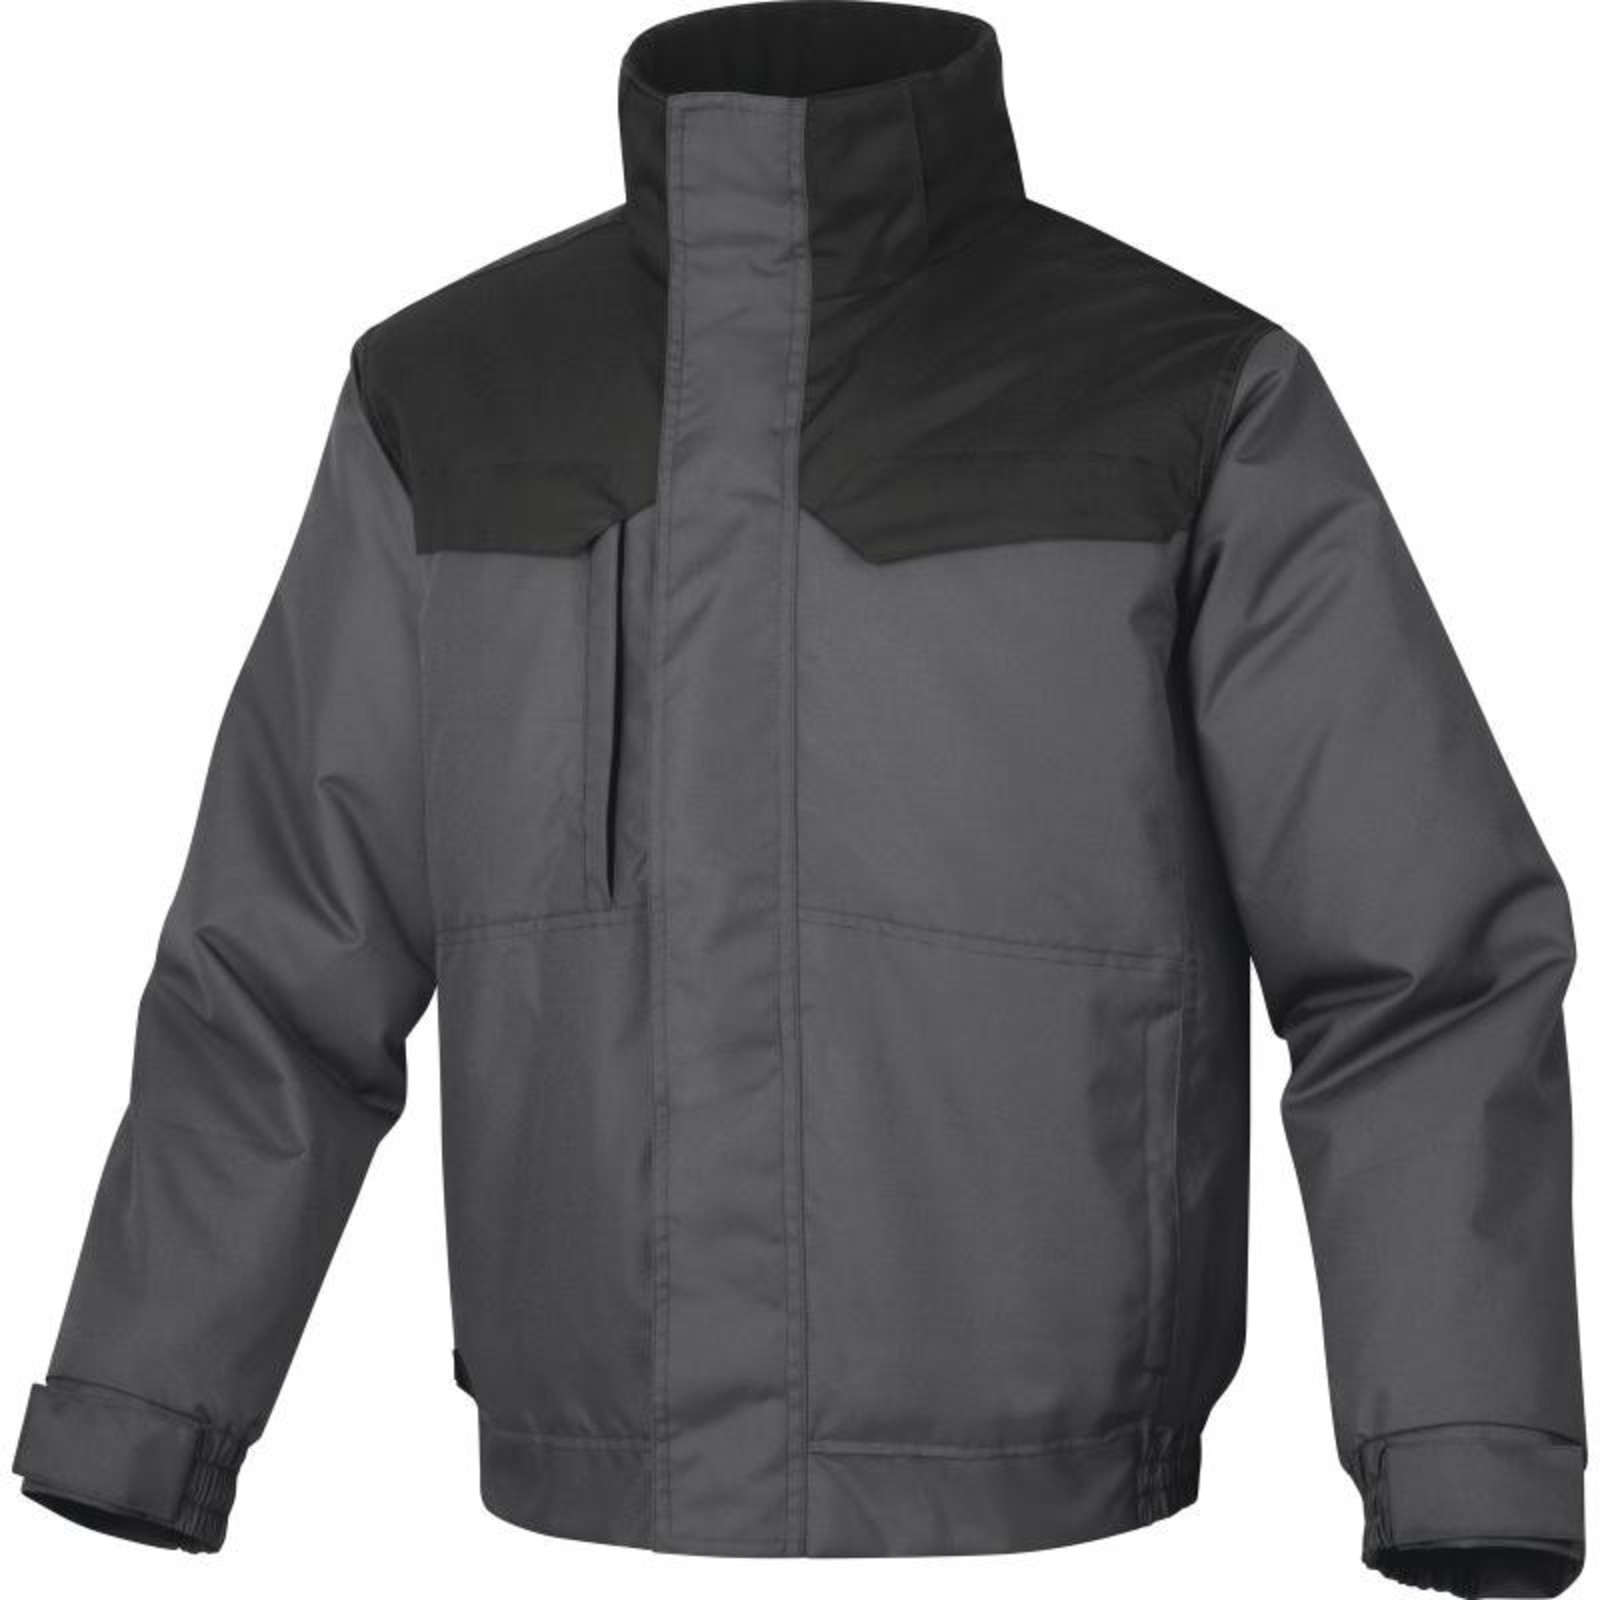 Zimná pánska bunda Delta Plus Northwood3 - veľkosť: XXL, farba: sivá/čierna